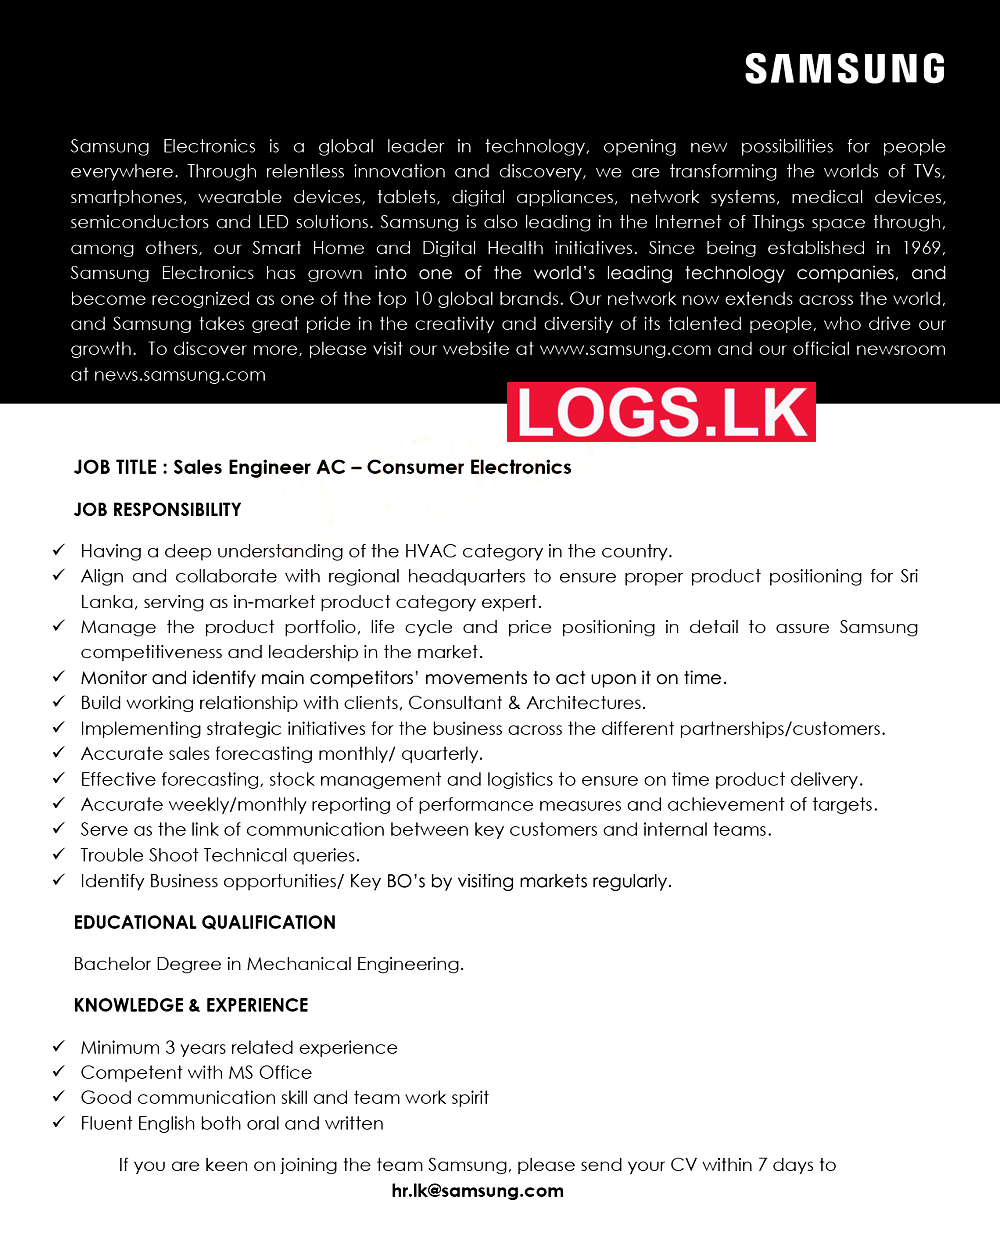 Sales Engineer AC Job Vacancy at Samsung Electronics Sri Lanka Job Vacancies